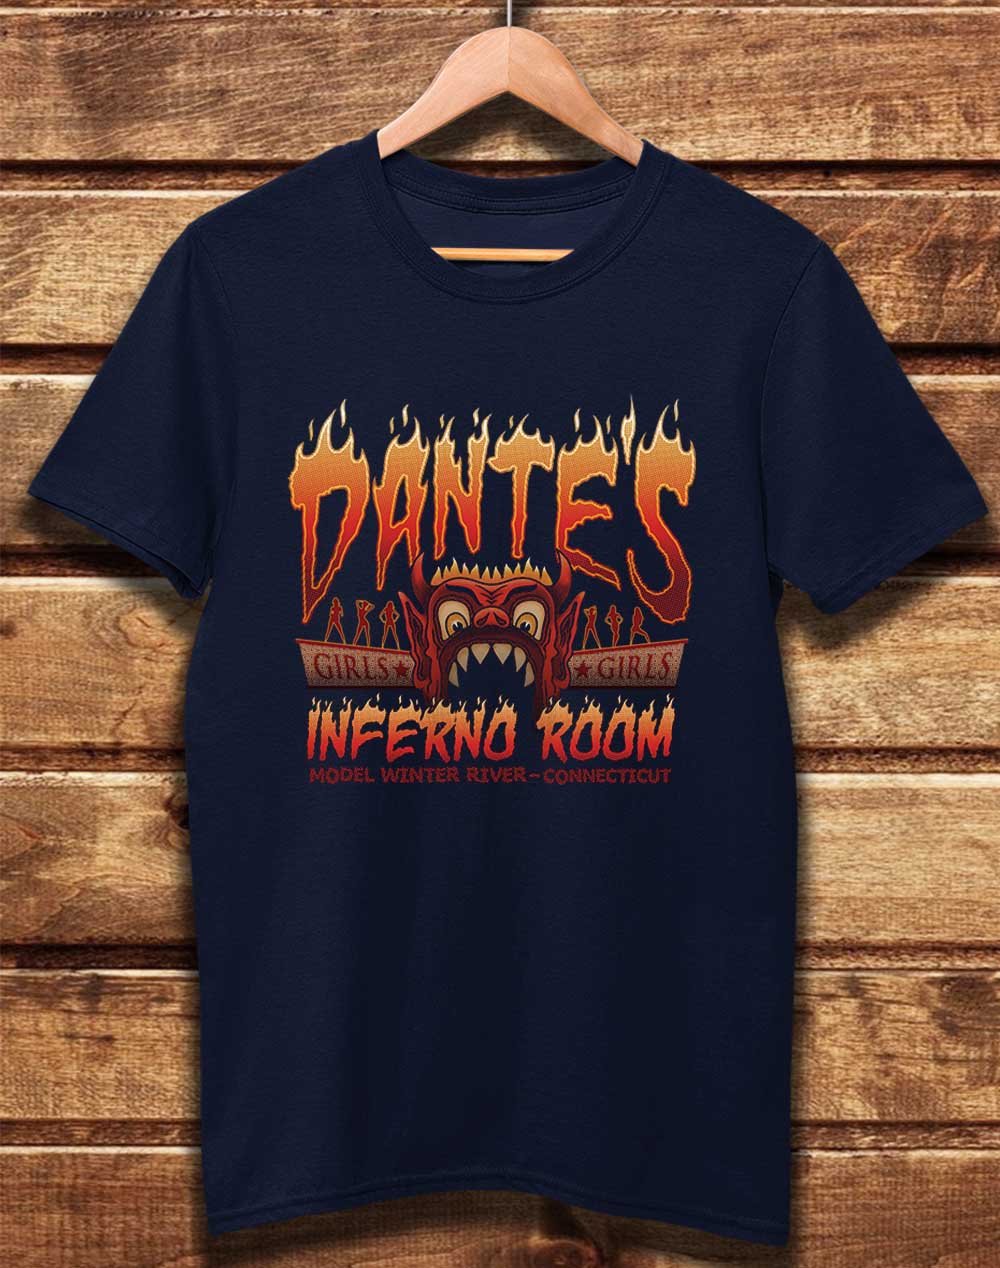 Navy - Dante's Inferno Room Organic Cotton T-Shirt